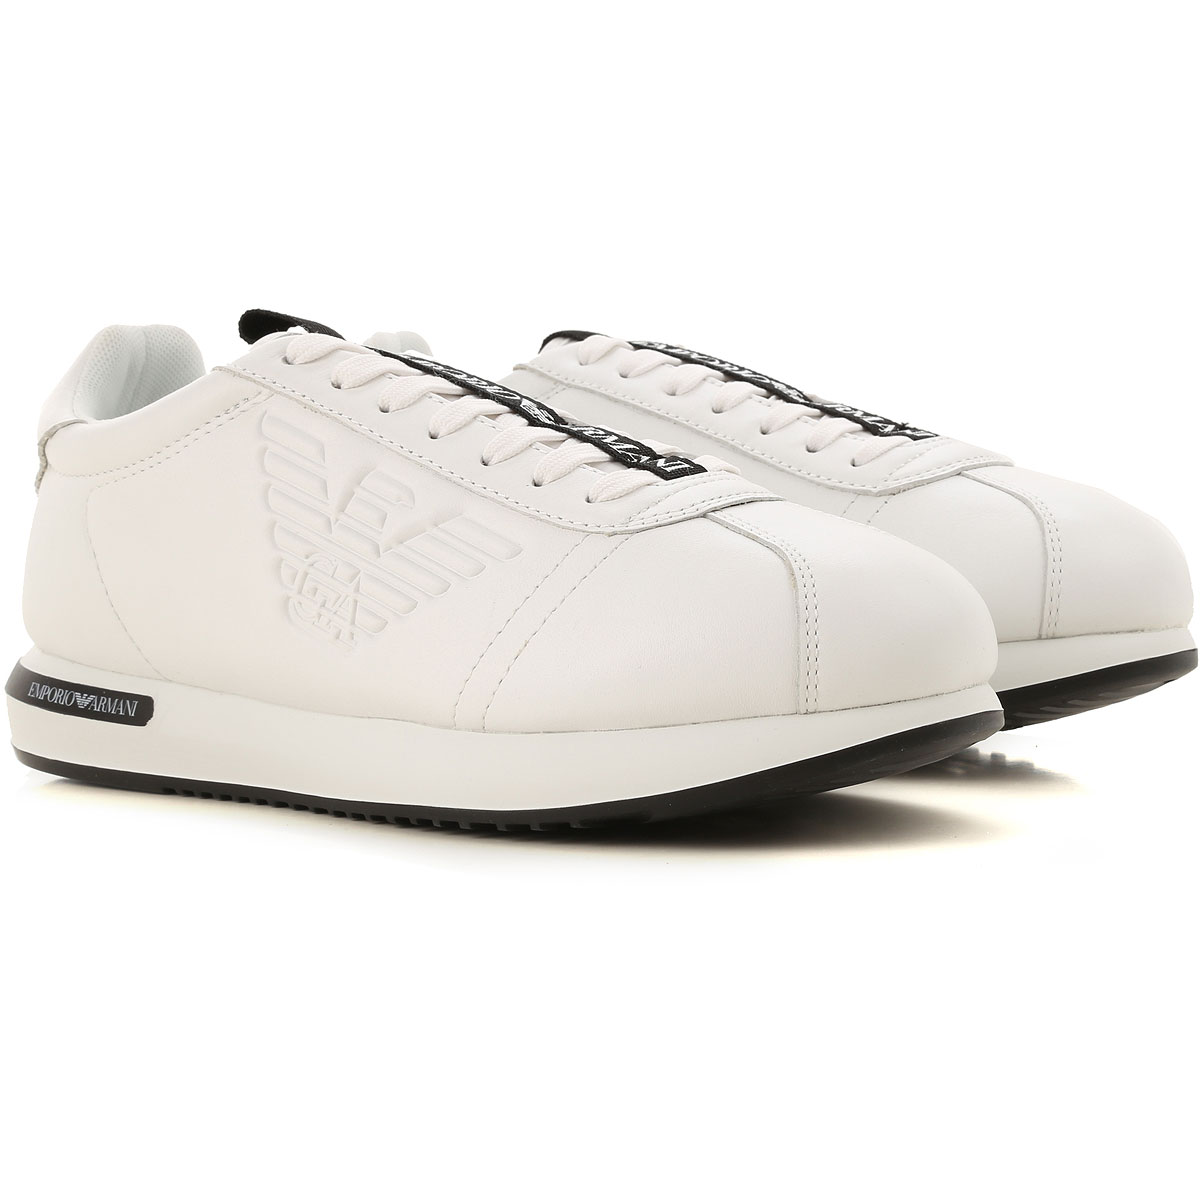 Mens Shoes Emporio Armani, Style code: x4x260-xl709-k222